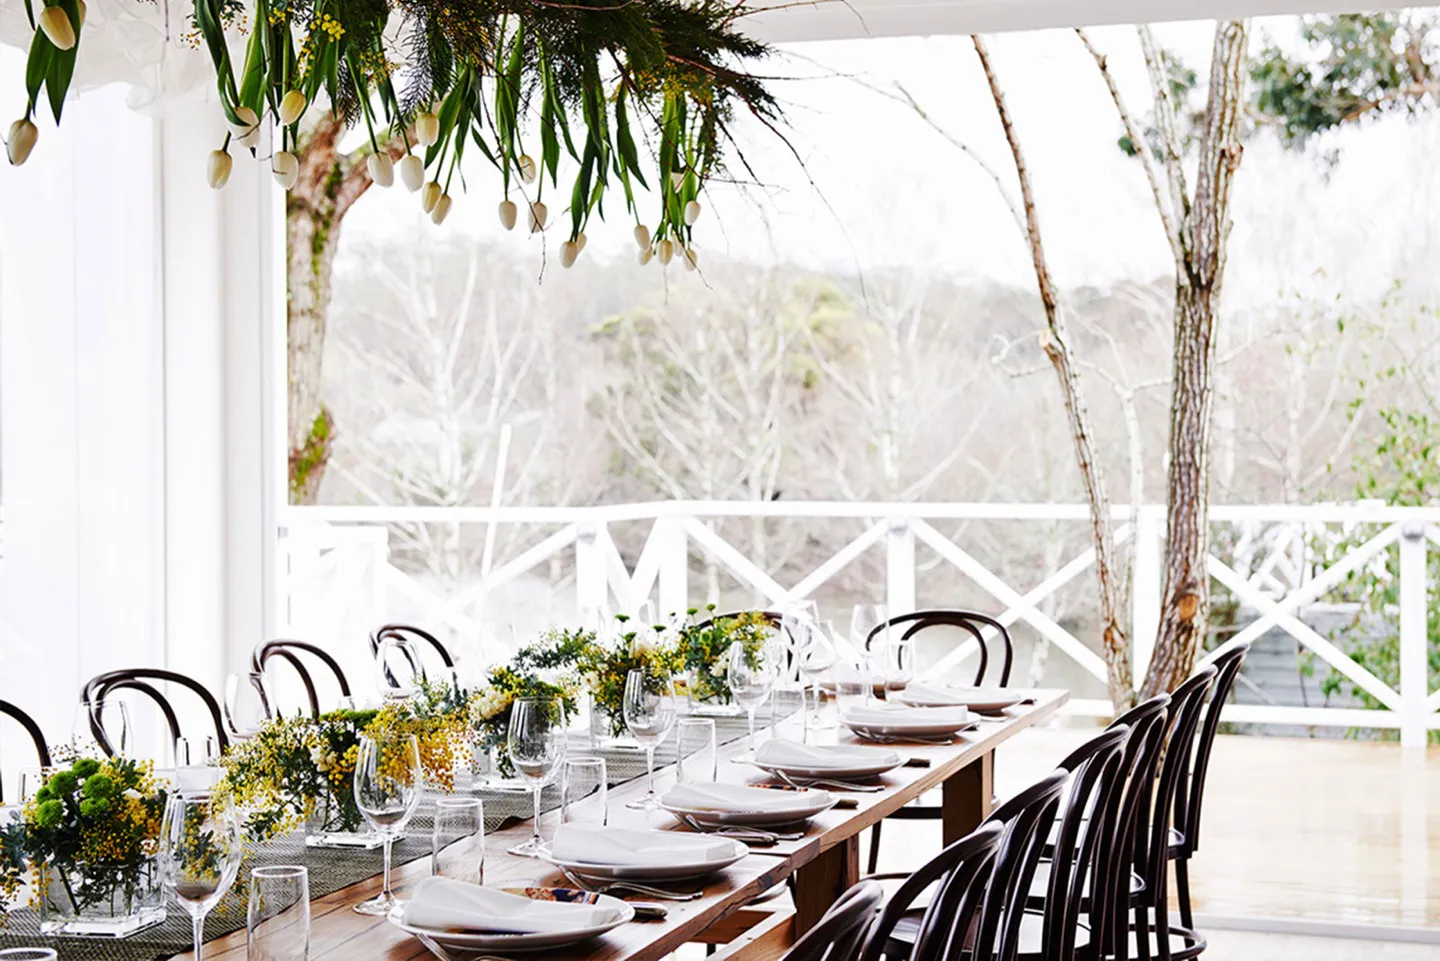 Enjoy award-winning dining on a luxury tour of Victoria